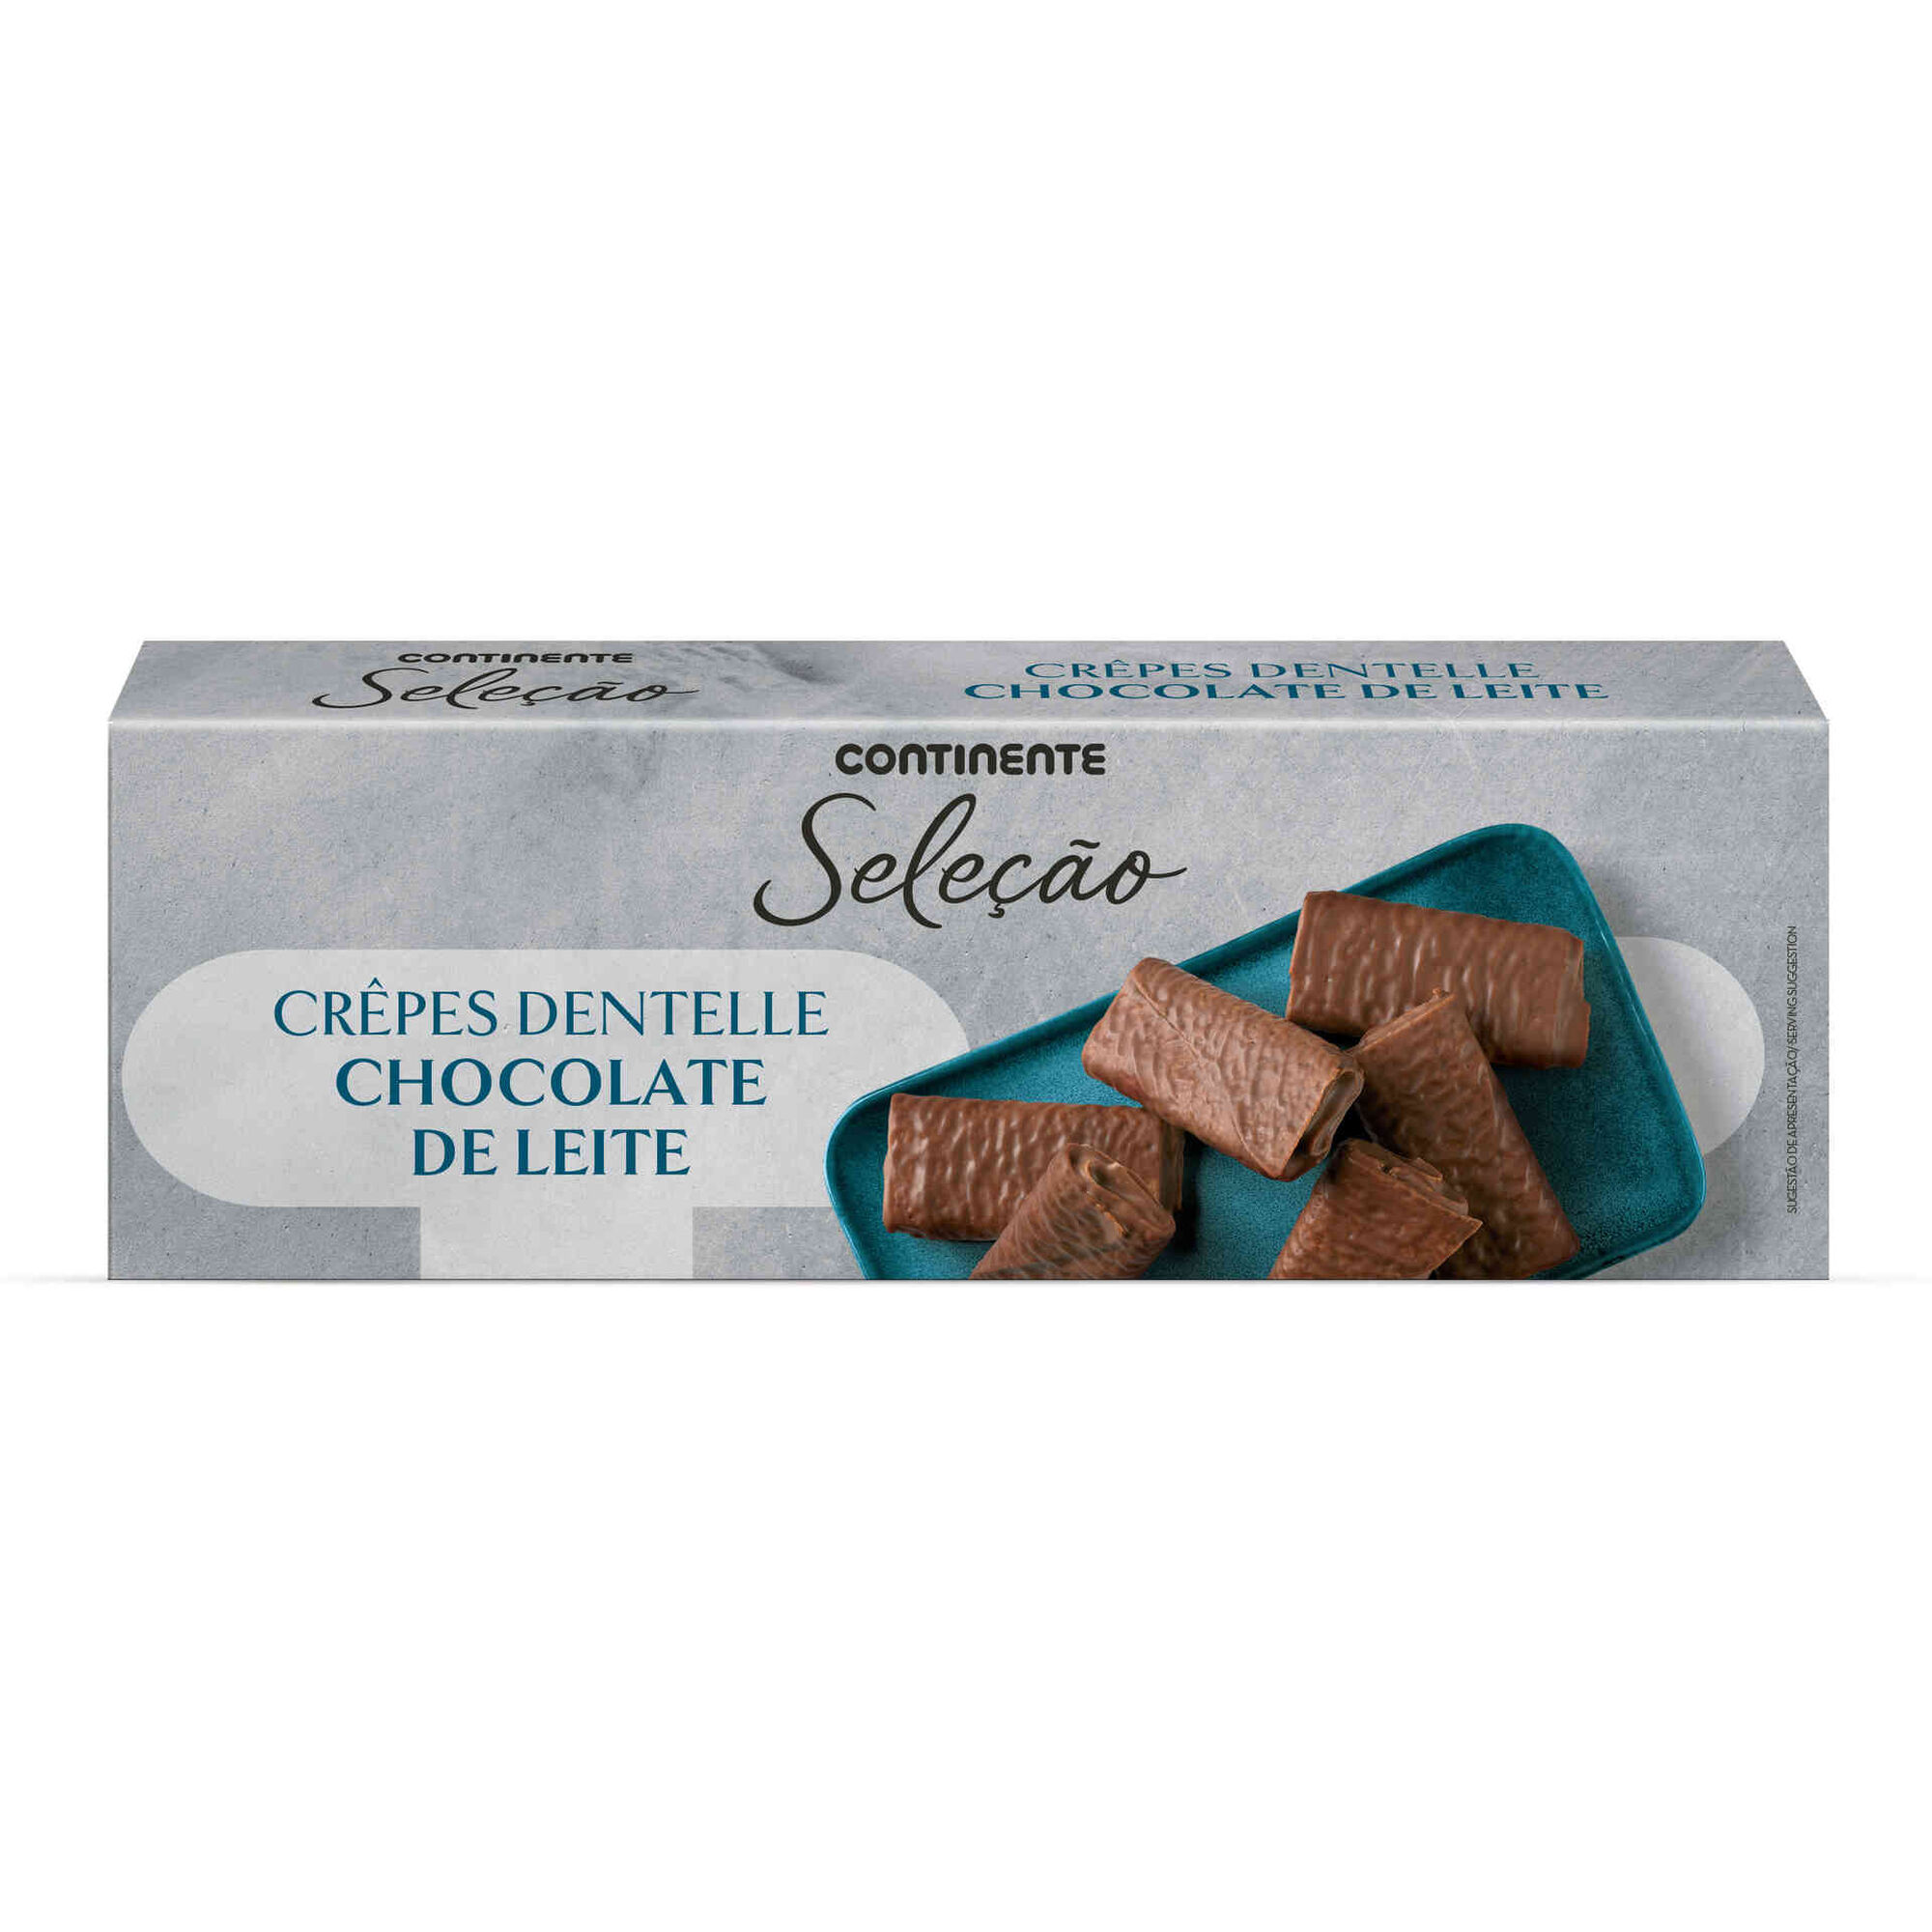 Crêpes Dentelle Chocolate de Leite